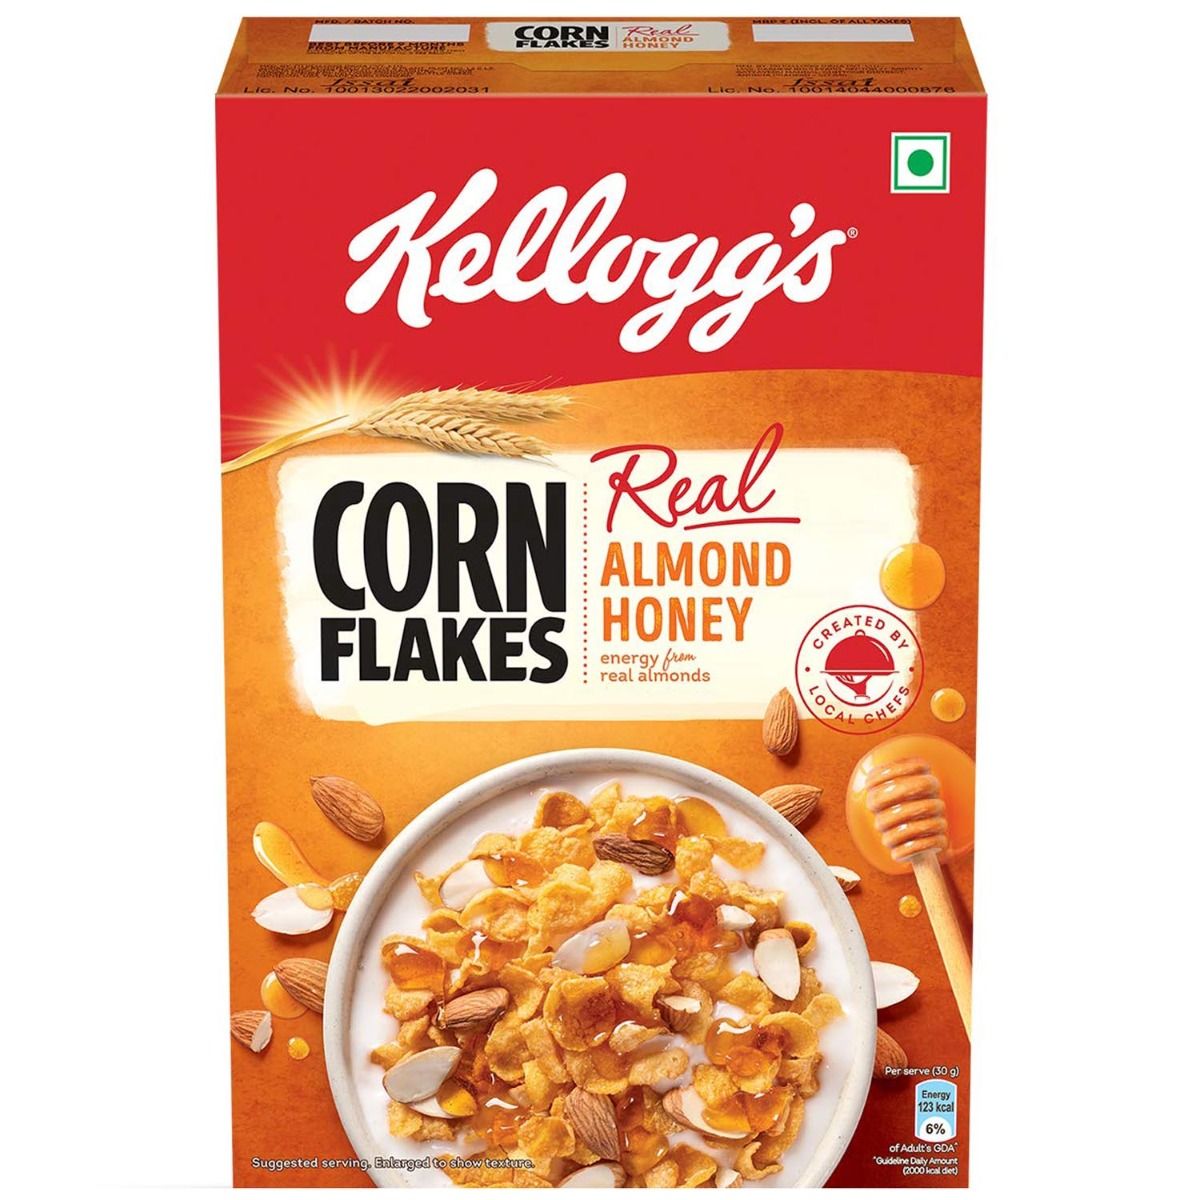 Buy Kellogg's Real Almond Honey Corn Flakes, 300 gm Online